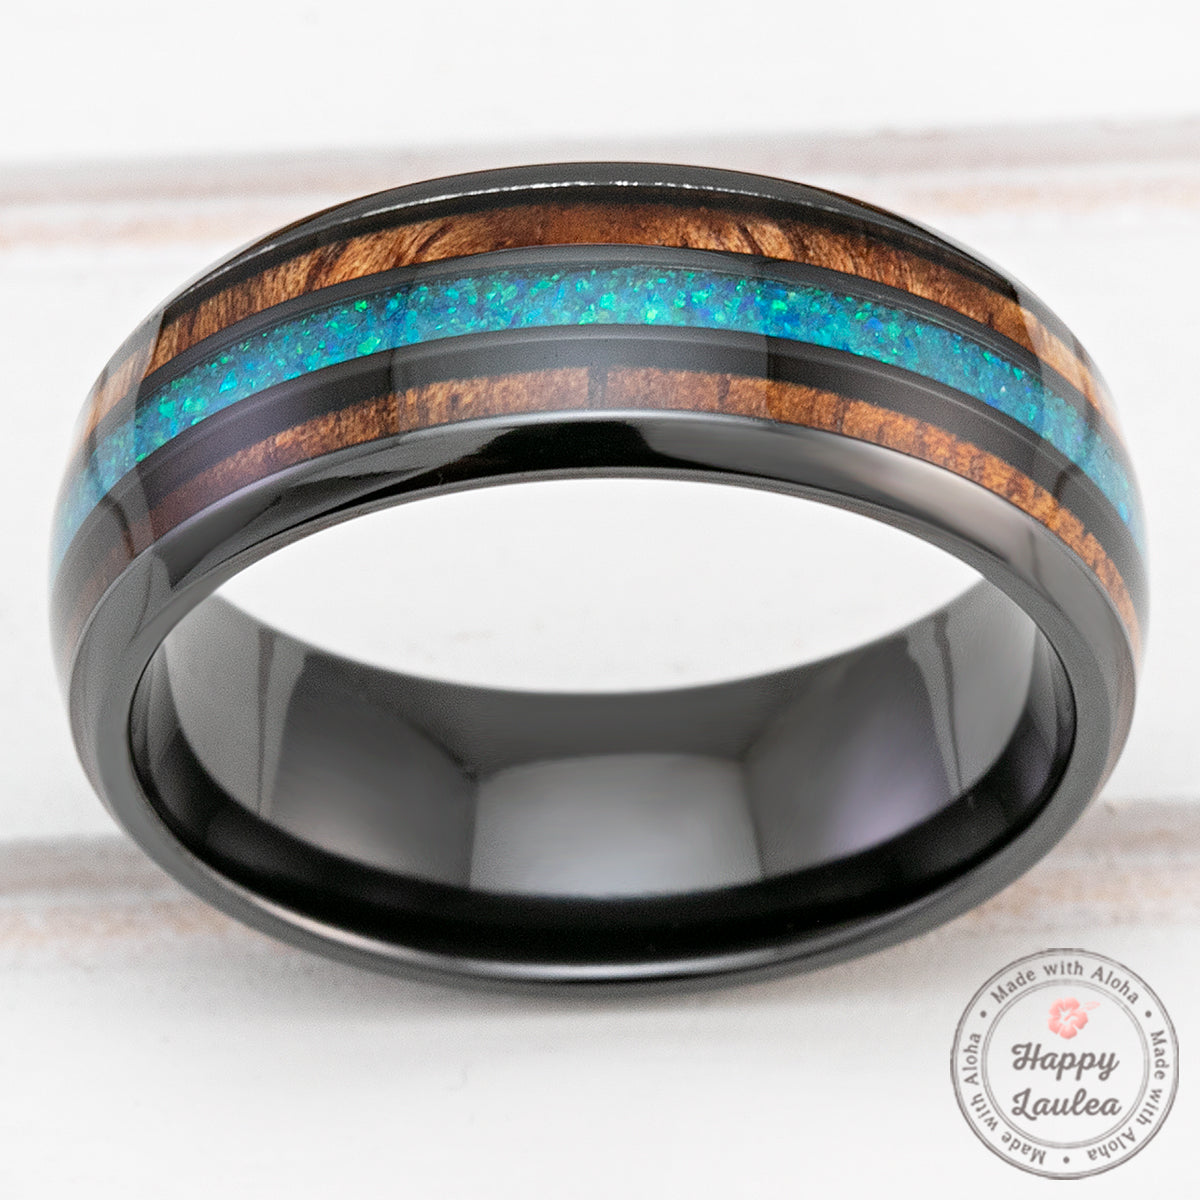 Black Zirconium 8mm Ring with Azure Blue Opal & Hawaiian Koa Wood - Dome Shape, Comfort Fitment